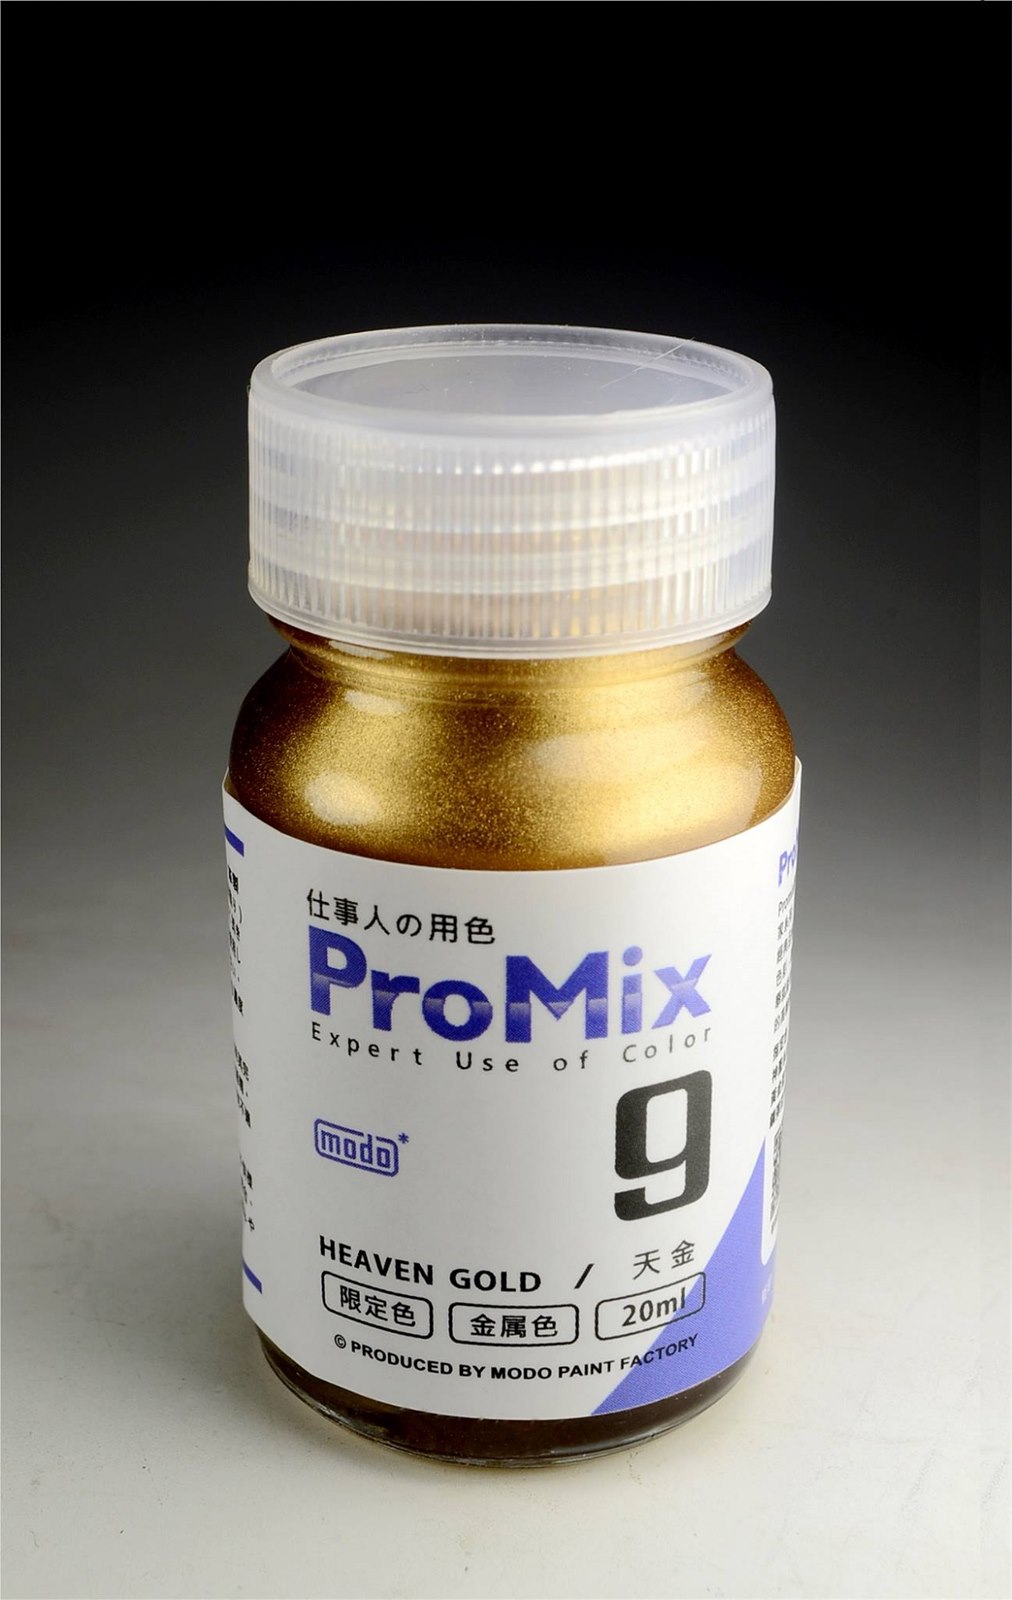 MODO PM-09 PROMIX 9 - Heaven Gold 20ML